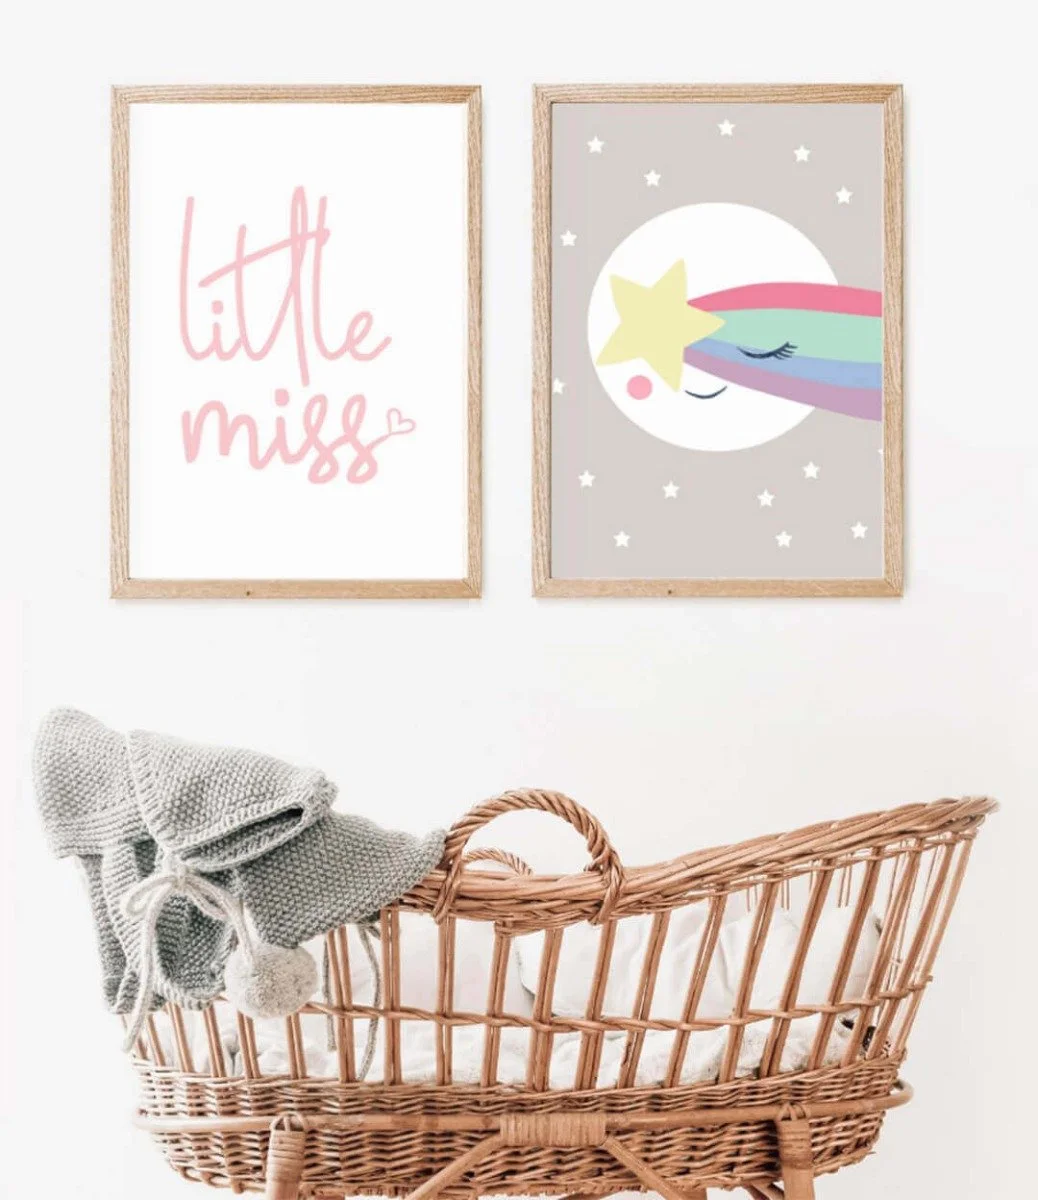 Set of 2 Wall Art Prints - Litte Miss & Sleepy Moon Star by Sweet Pea